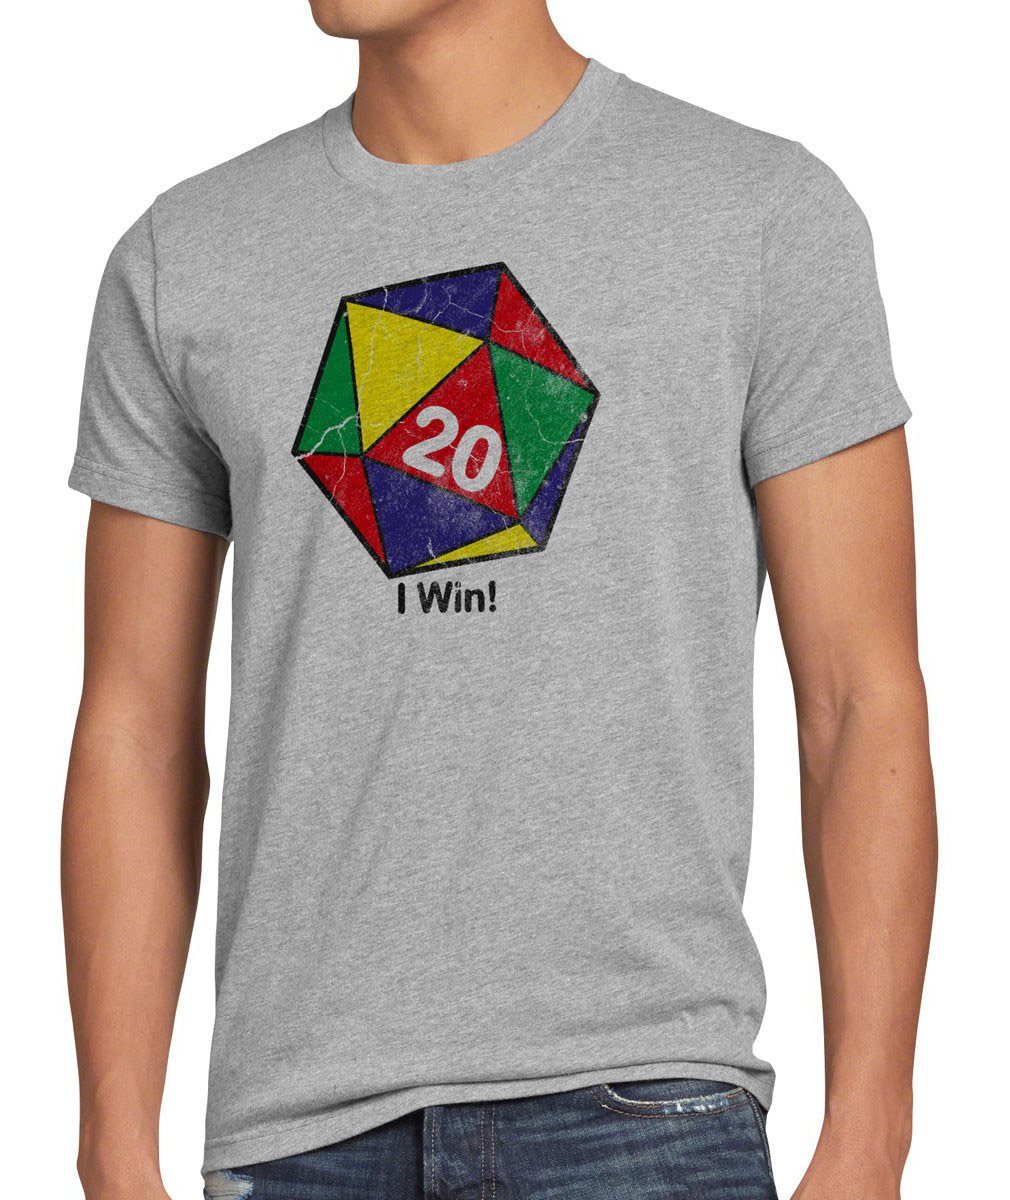 style3 Print-Shirt Herren T-Shirt Sheldon W20 Zauberwürfel big cooper theory the bang mathematik grau meliert